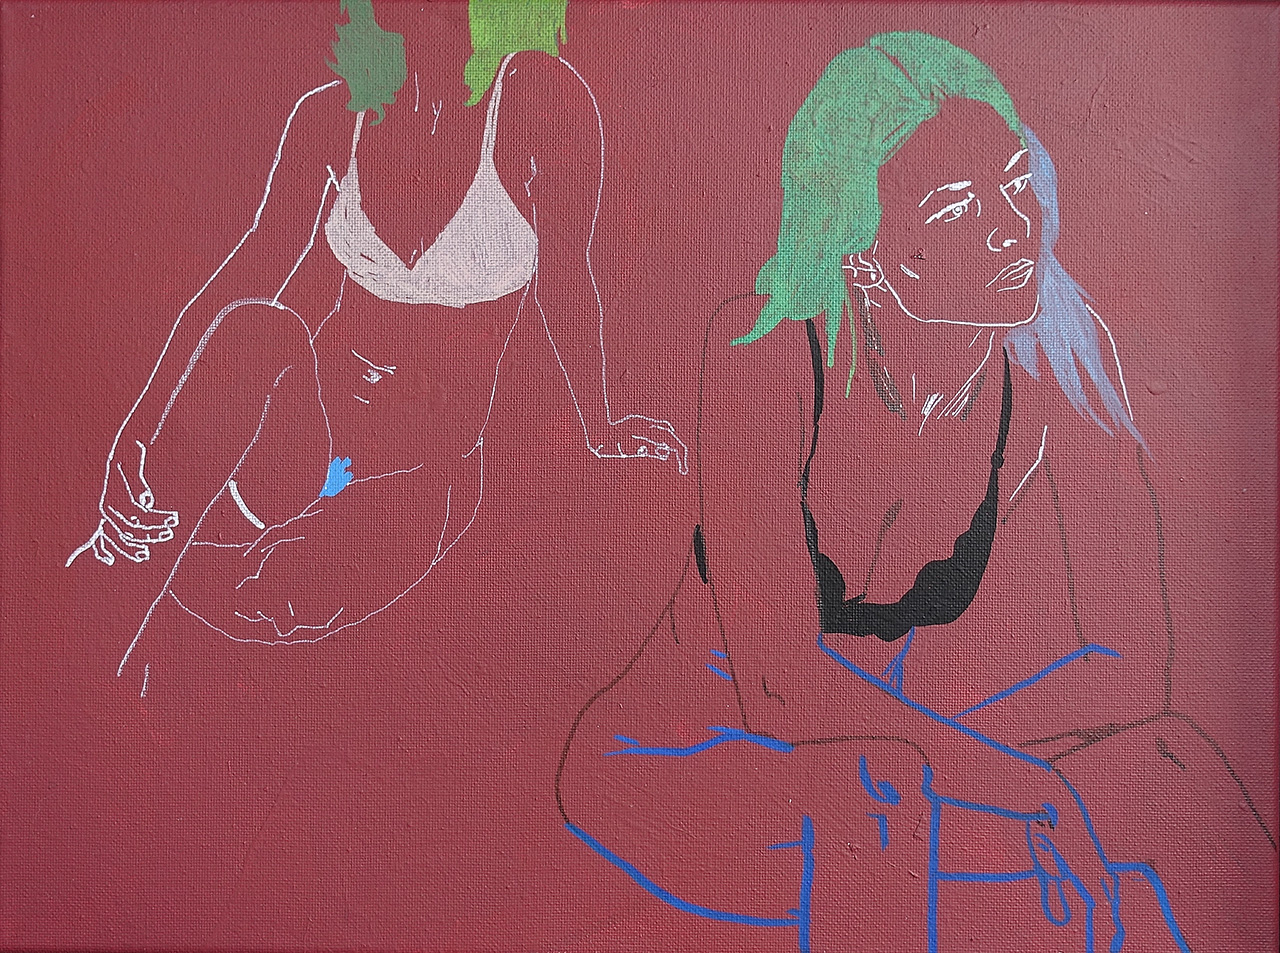 Agnieszka Sandomierz - Positive negative (Tempera on canvas | Size: 46 x 36 cm | Price: 2800 PLN)